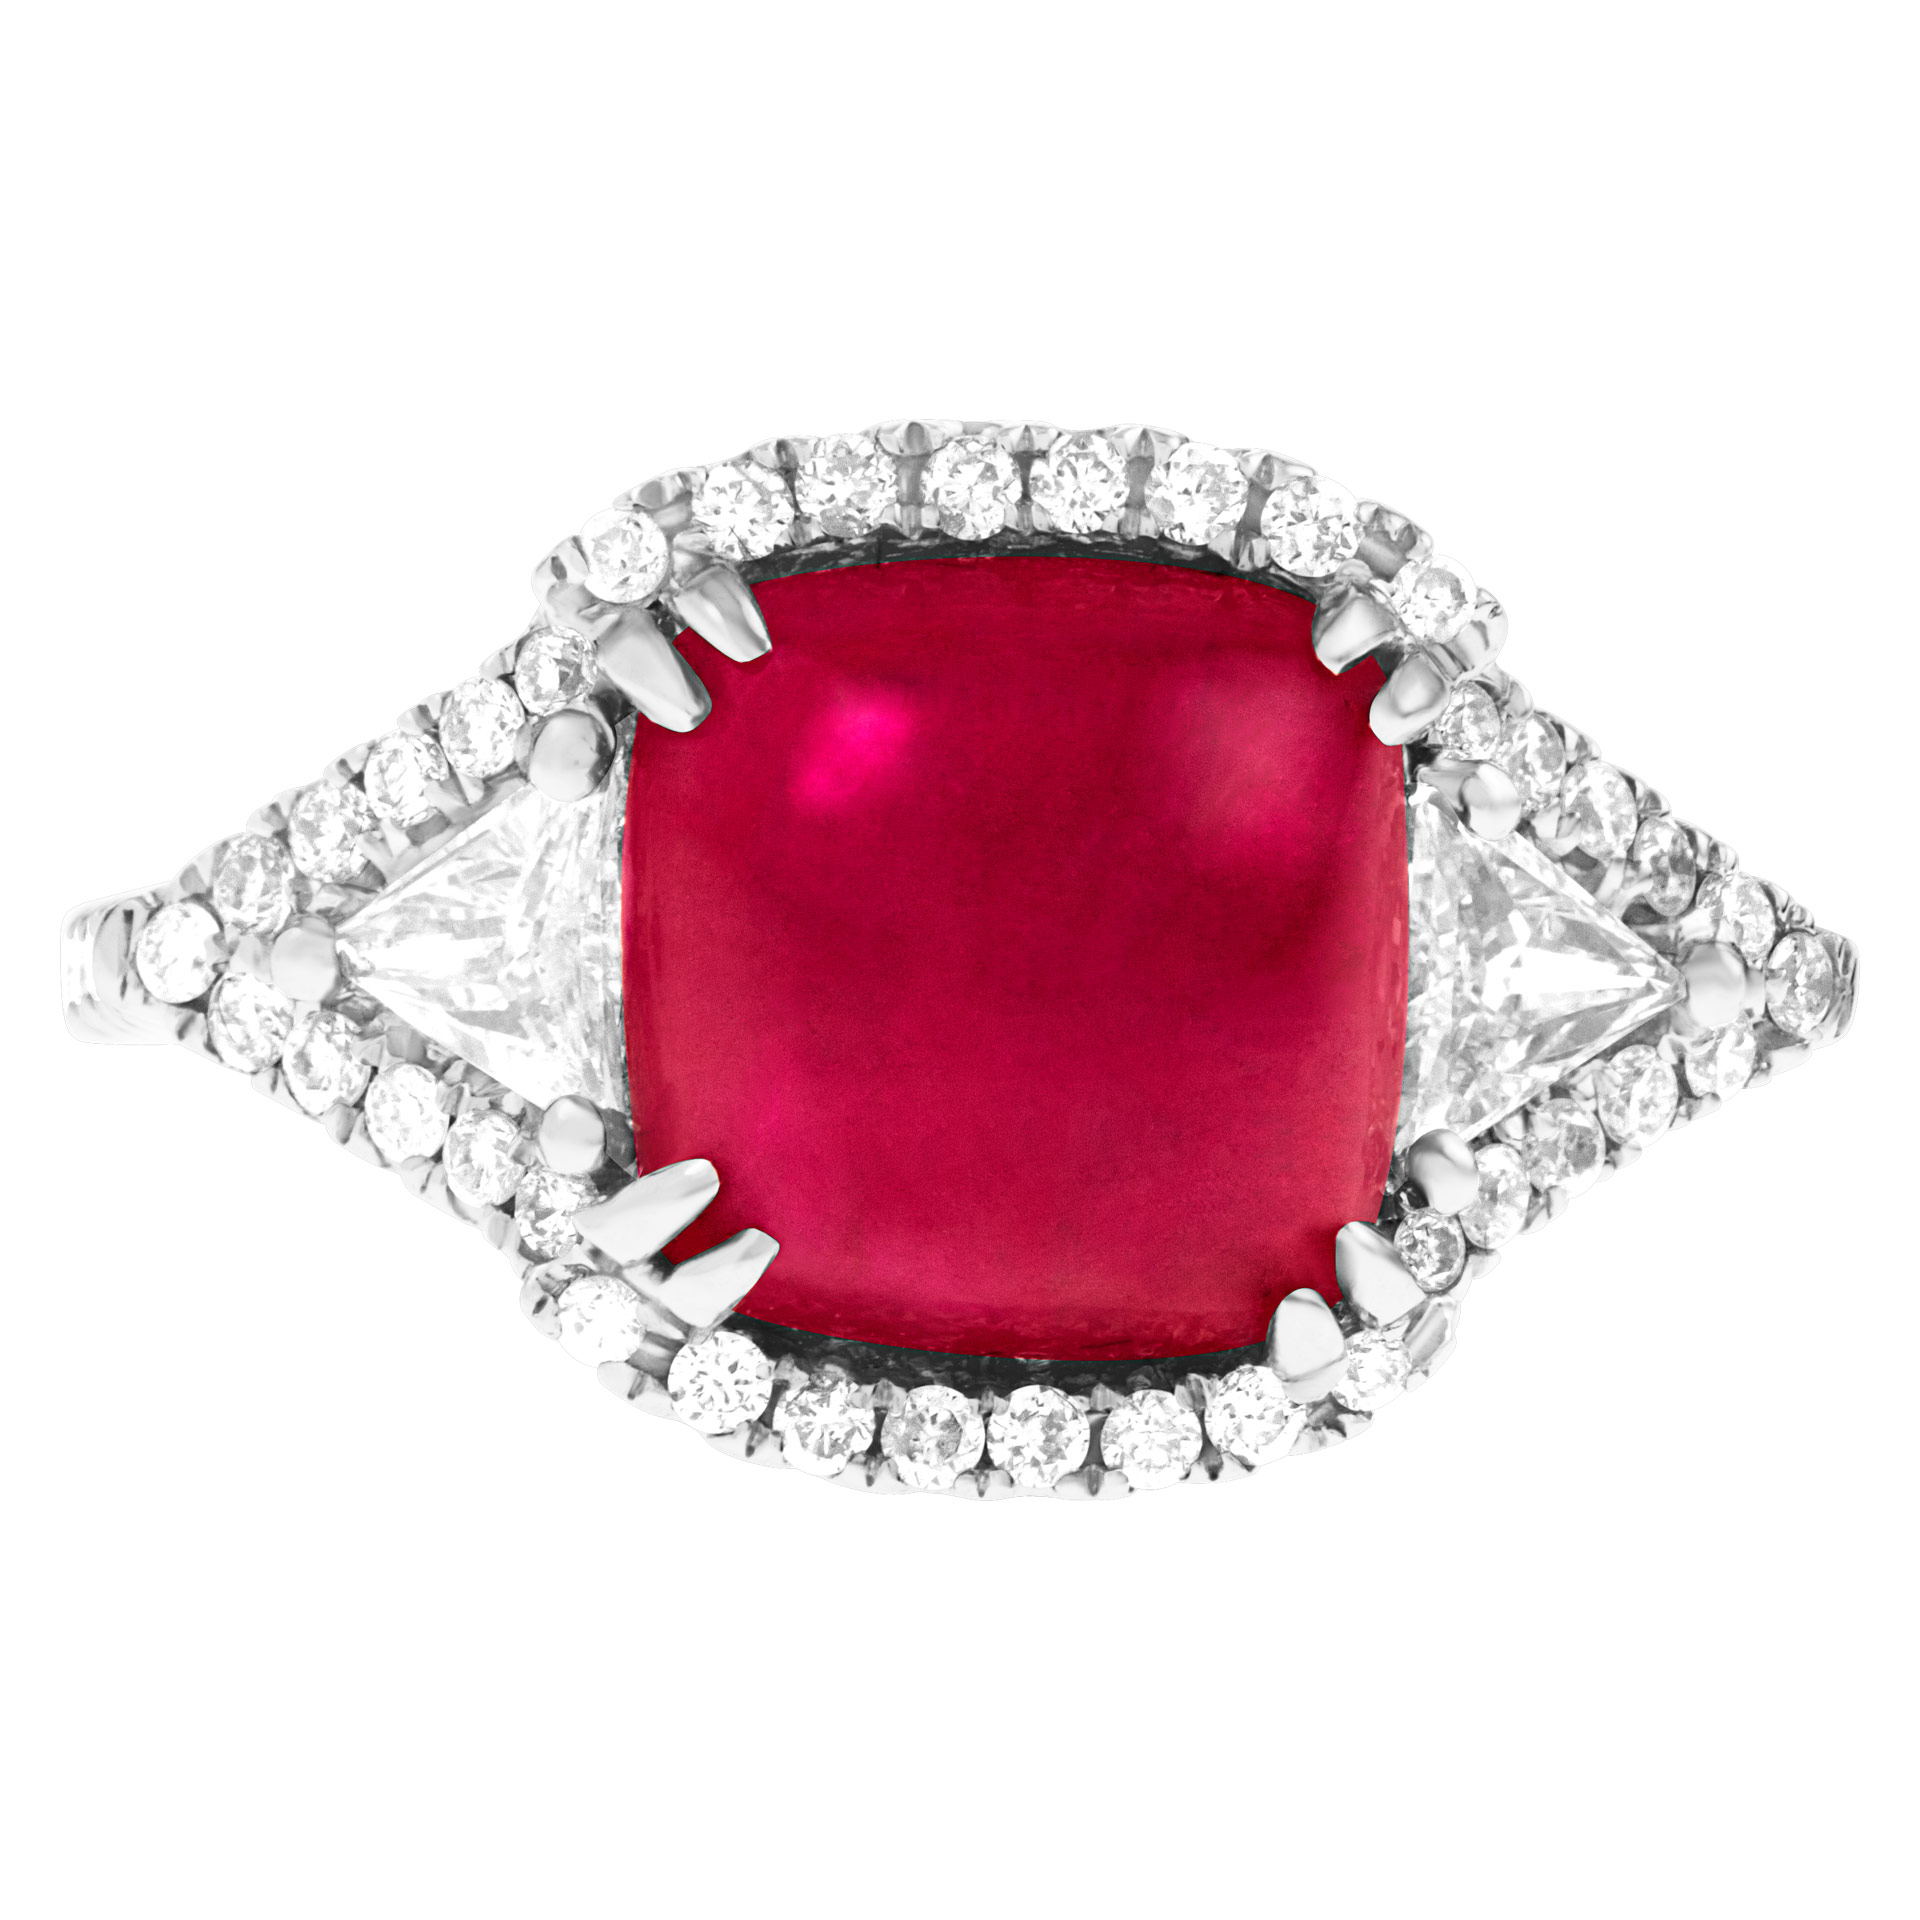 Elegant diamond and ruby ring in 18k white gold